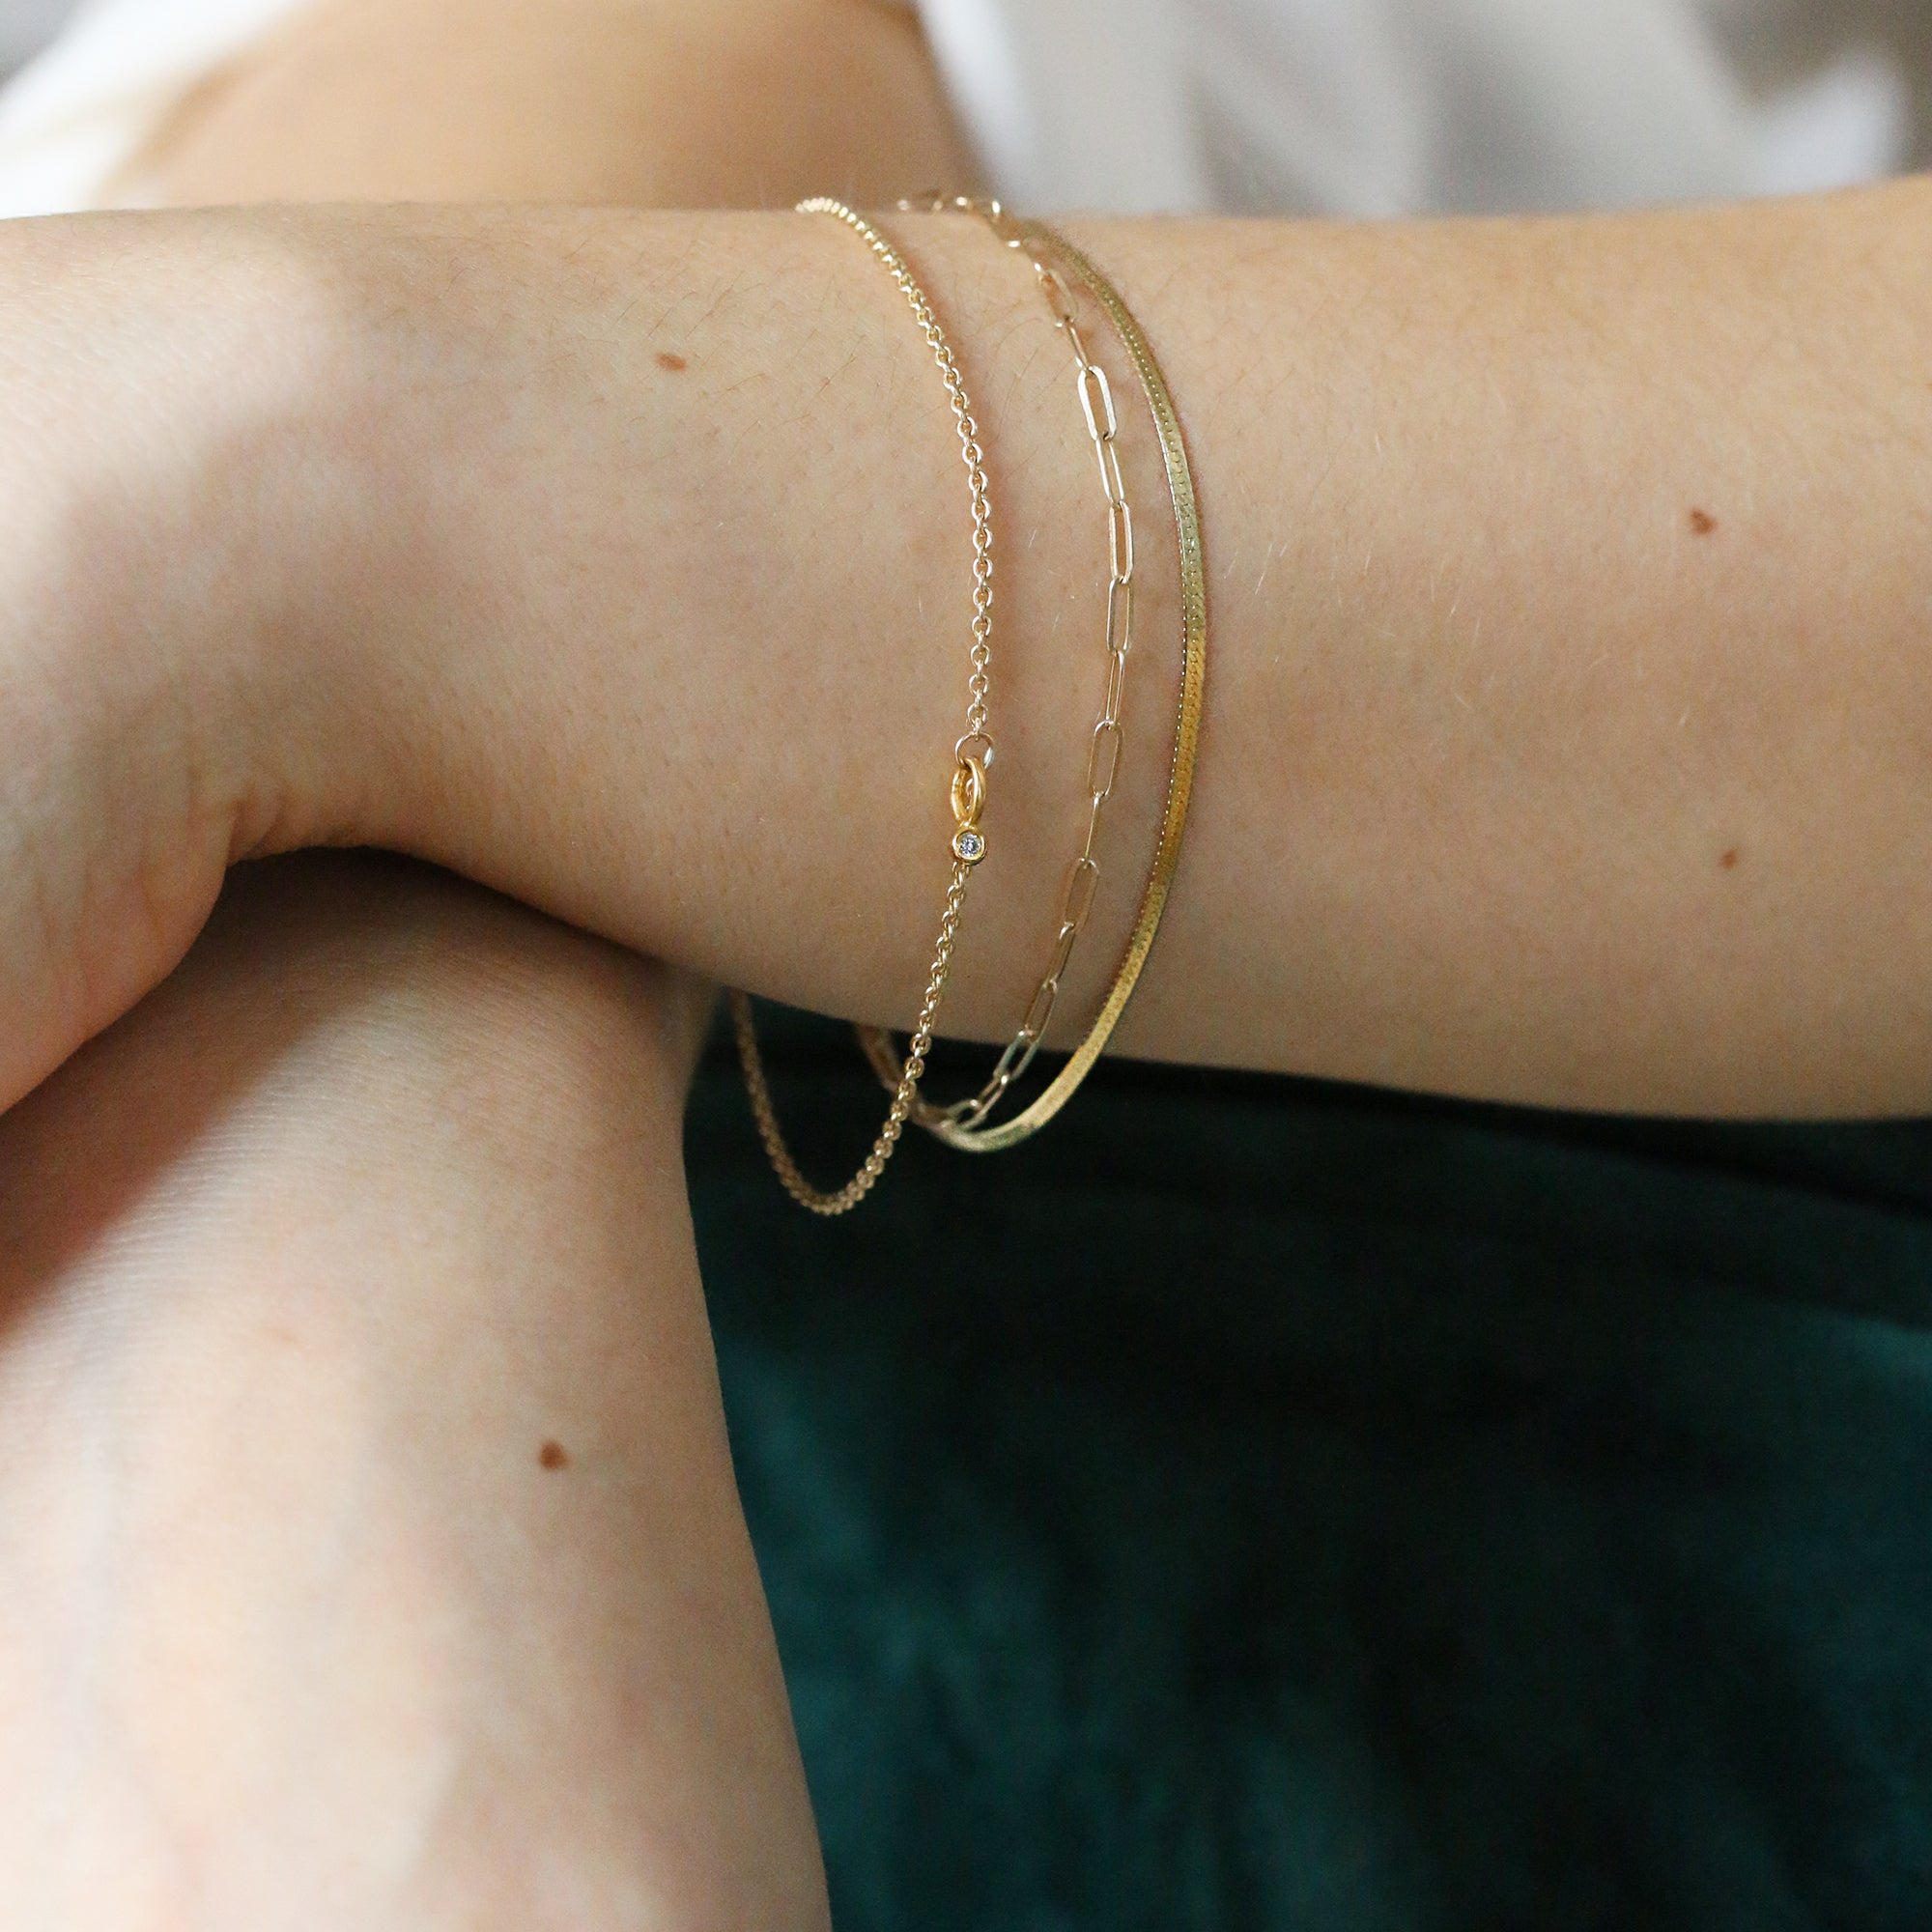 Buy Memoir Gold plated flat chain simple sober, Stylish fashion bracelet  Women Girls Latest at Amazon.in